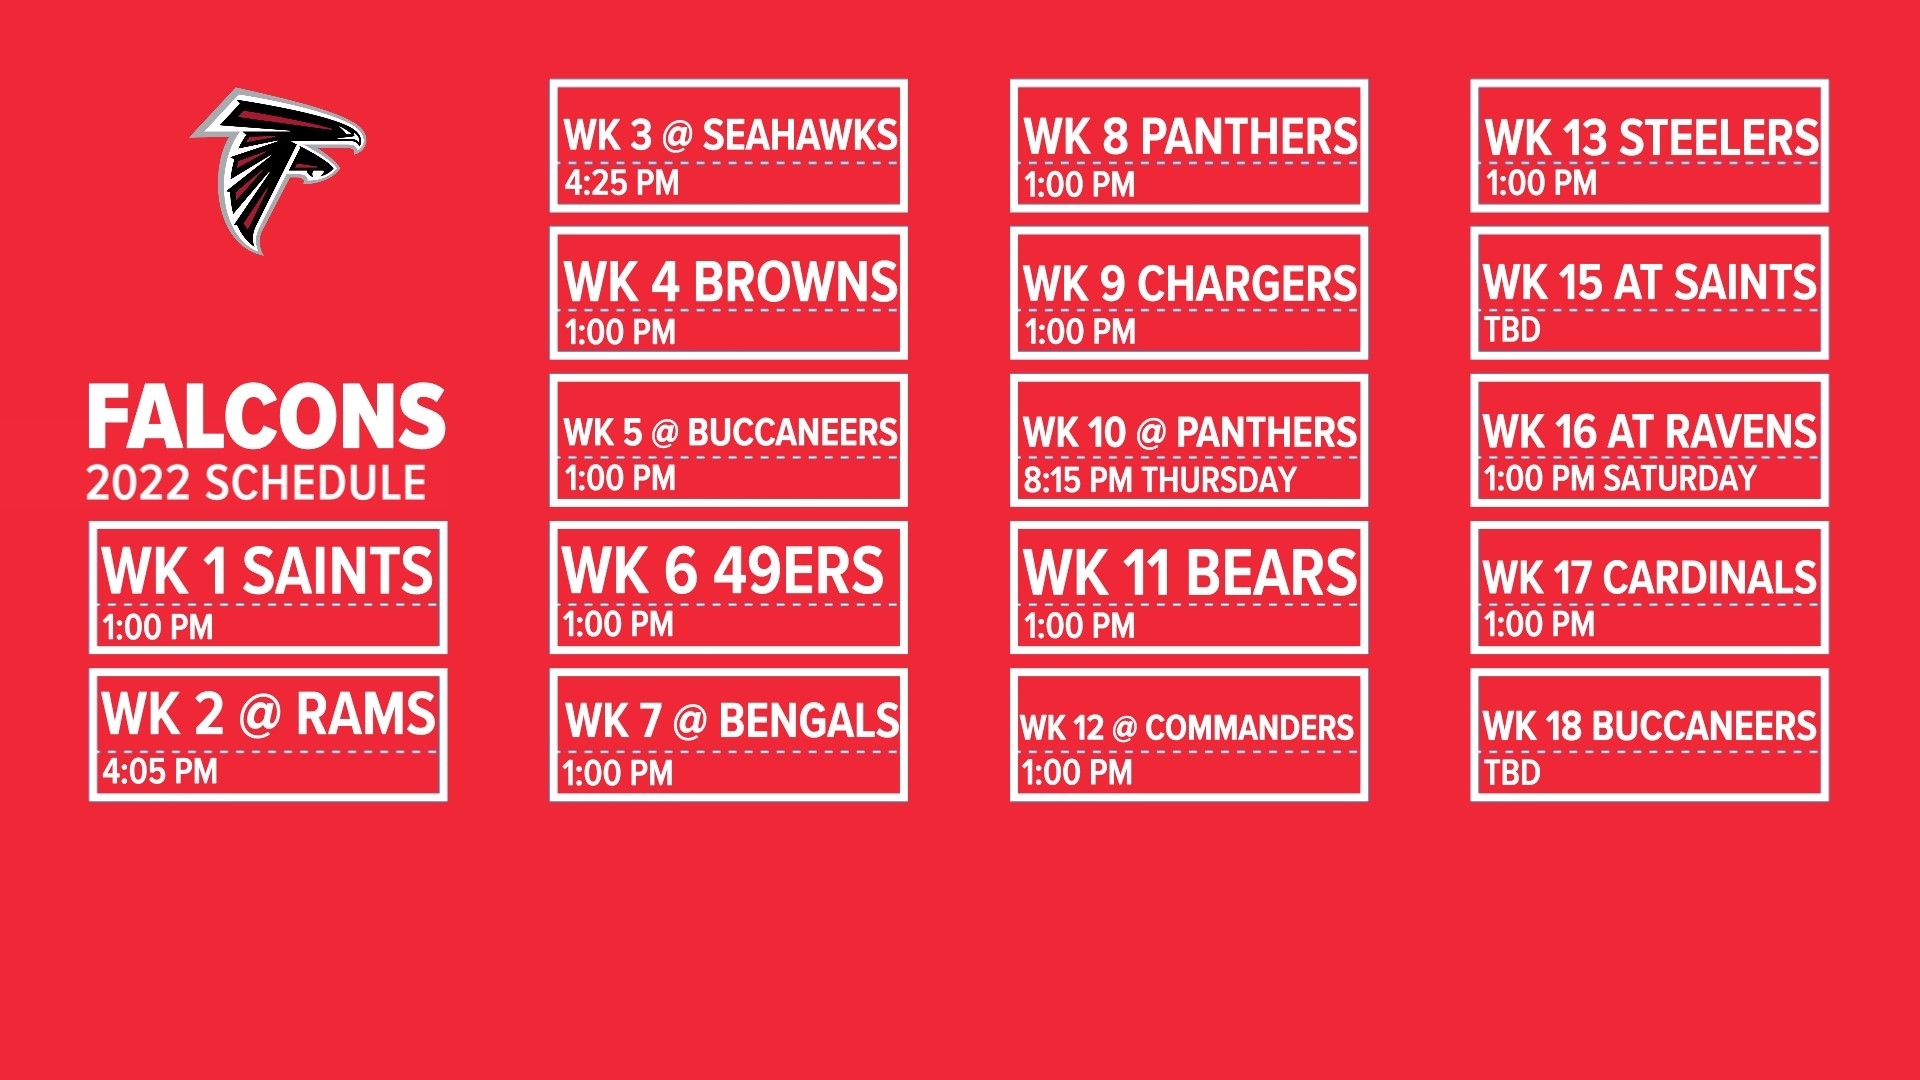 Printable Atlanta Falcons Schedule